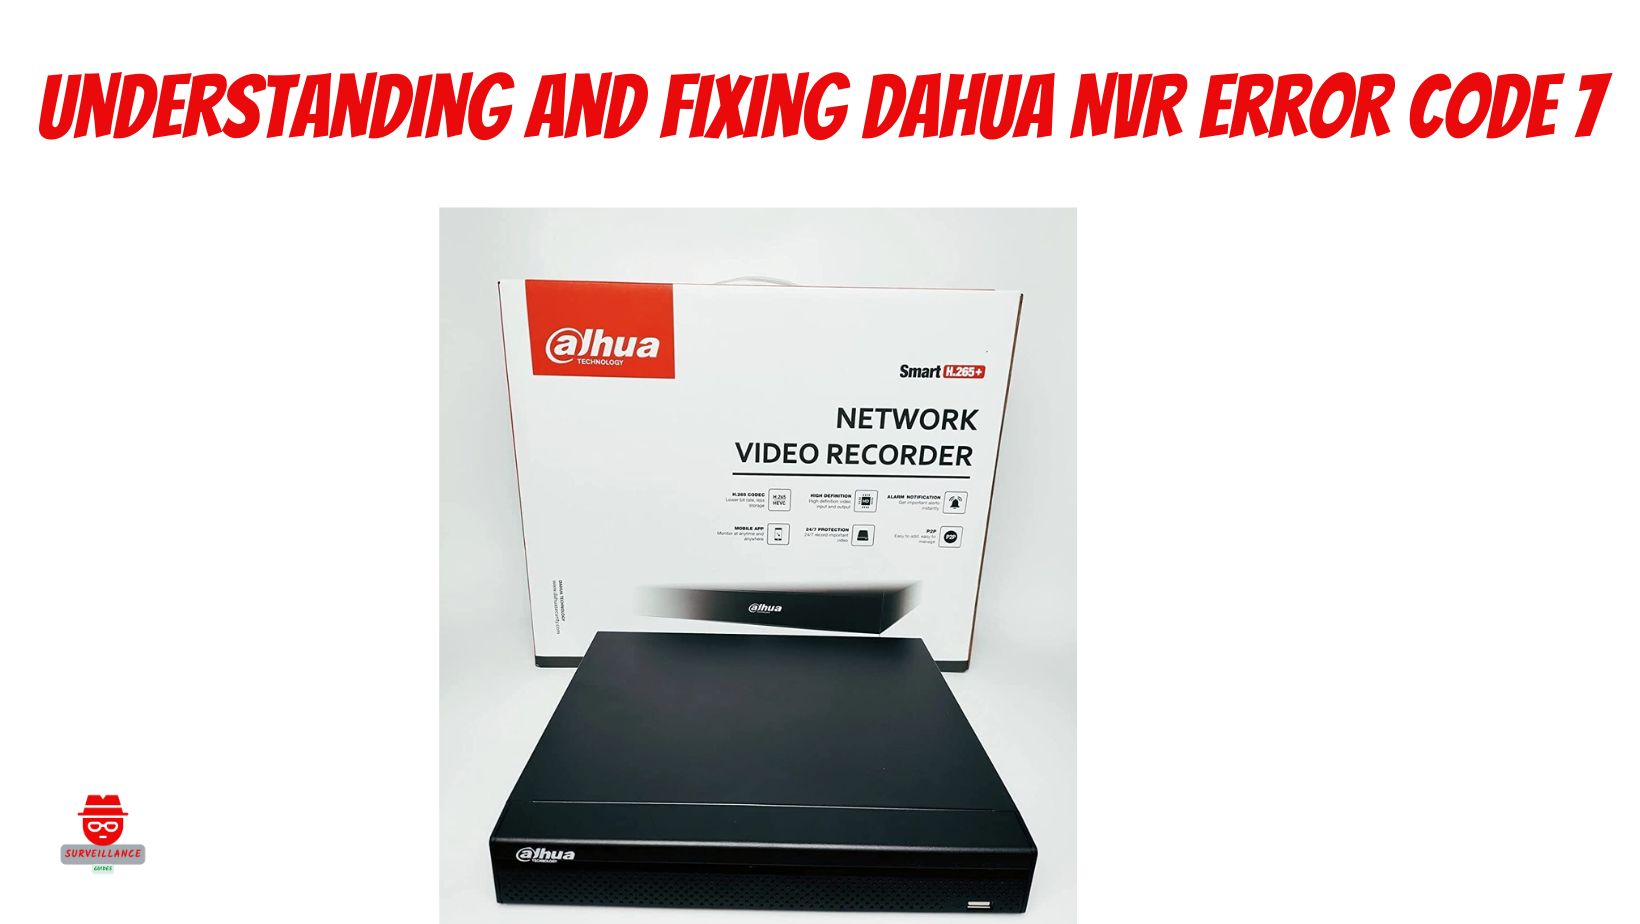 Dahua NVR error code 7